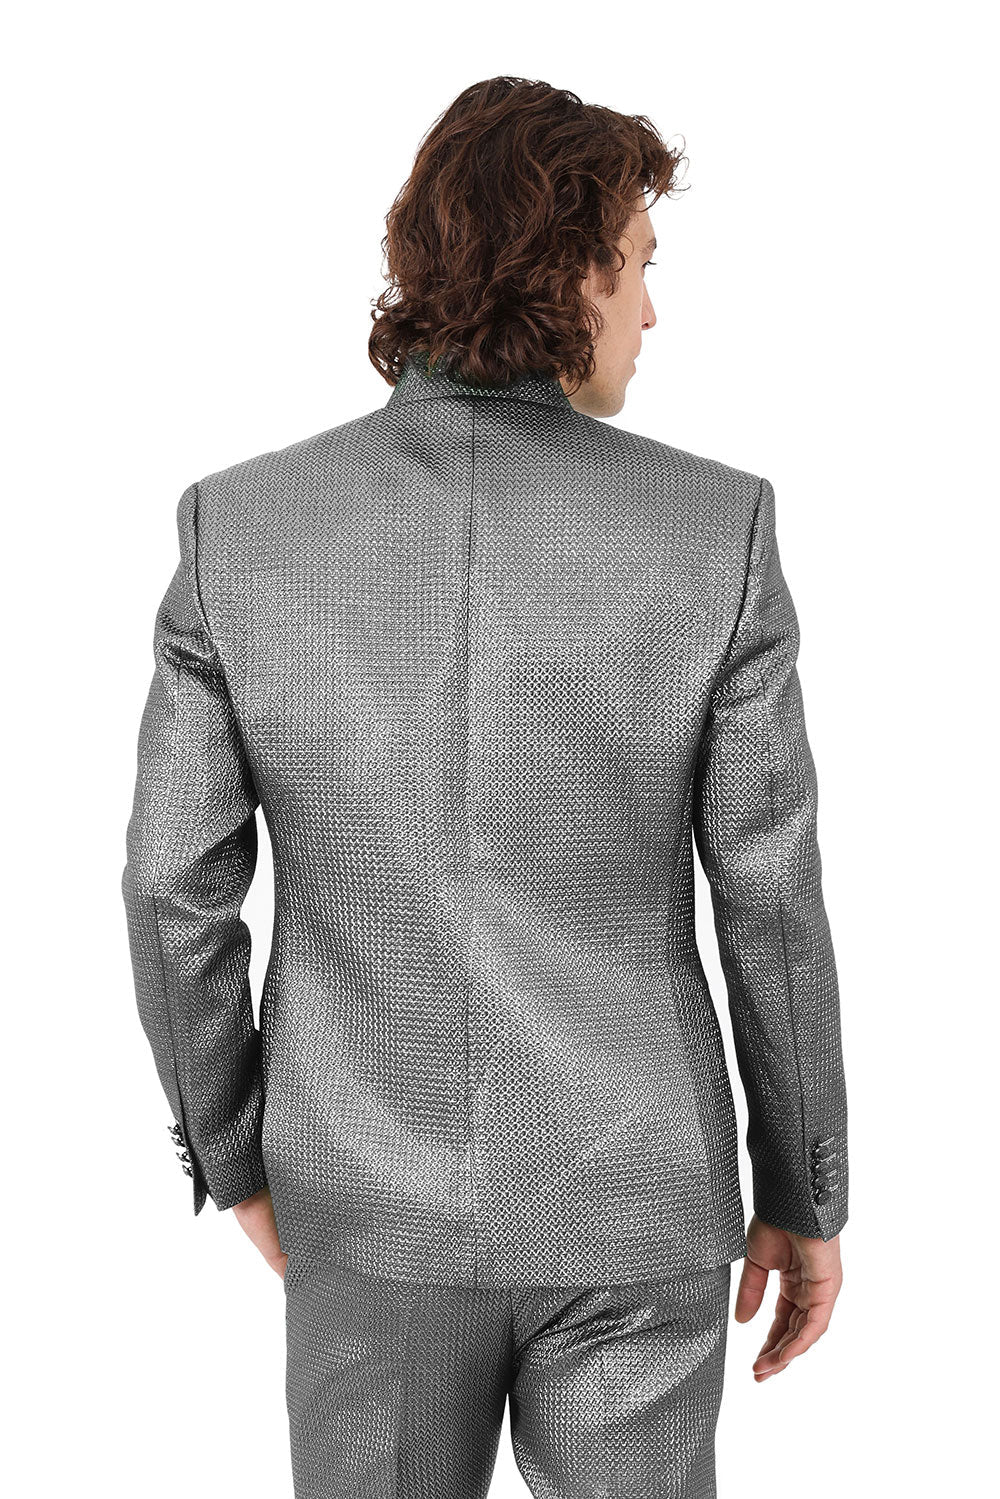 Barabas Men's Stand Collar Shiny Textured Material Blazer 2BL3105 Silver